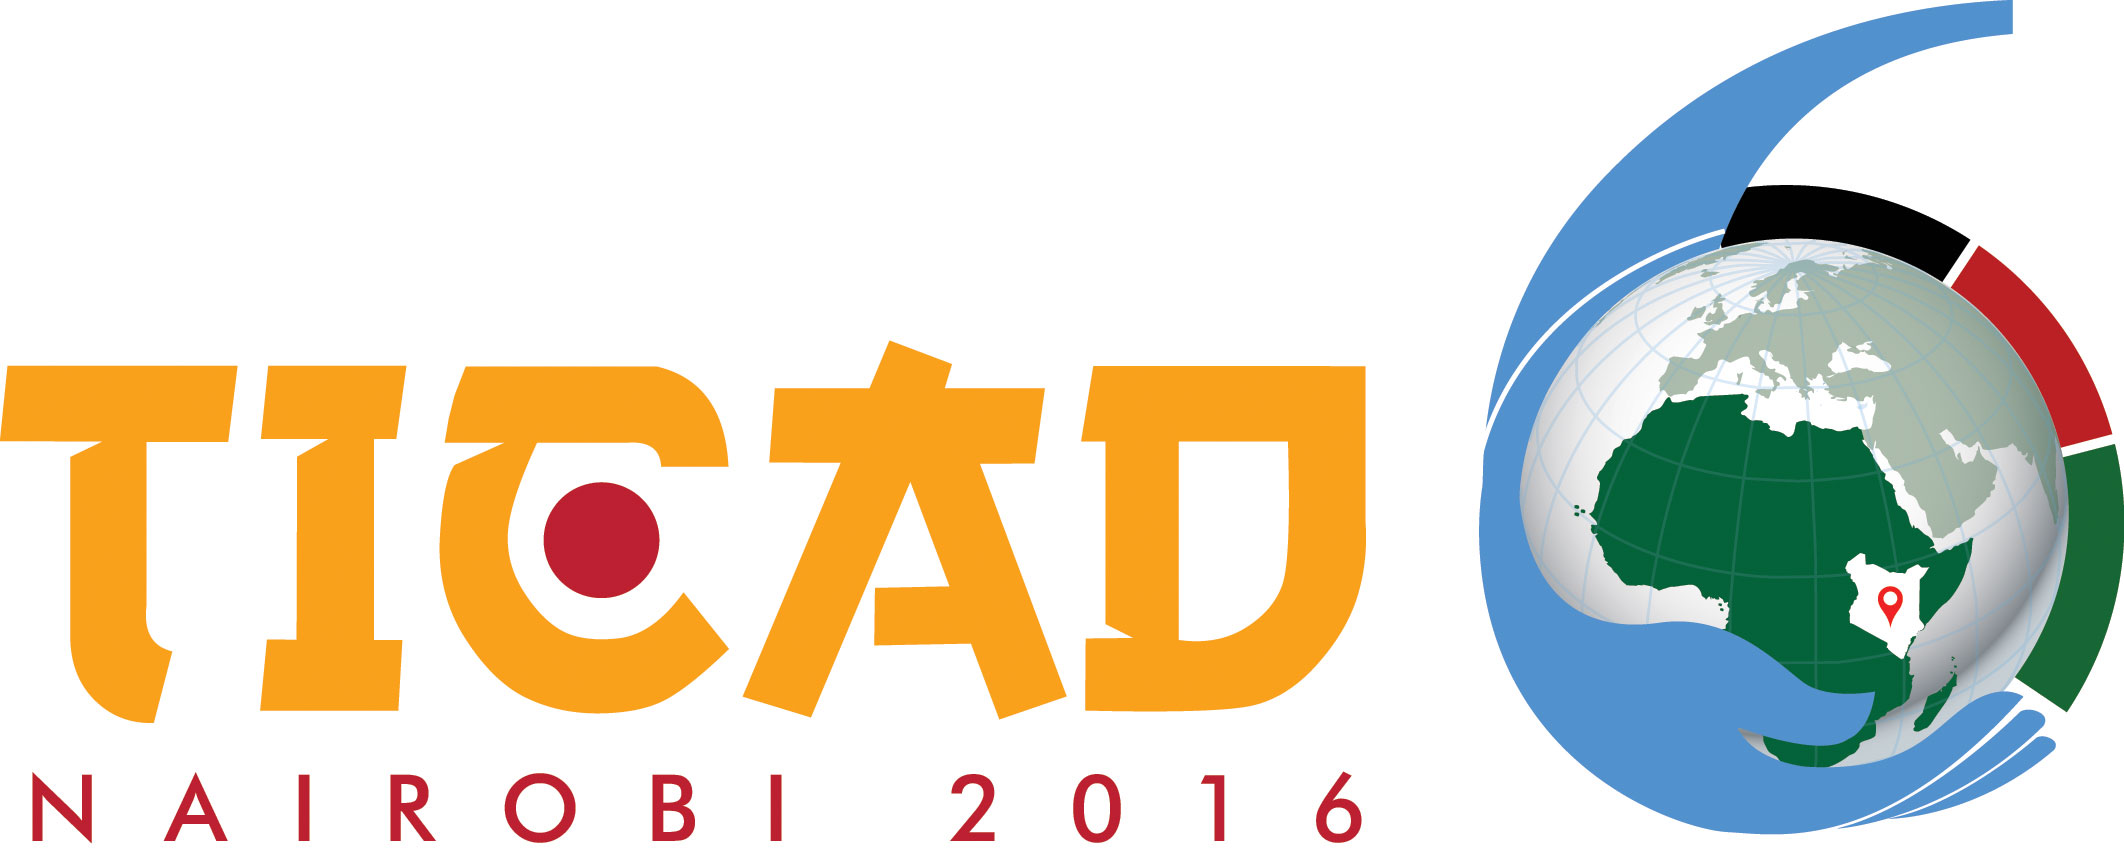 TICAD 6 logo